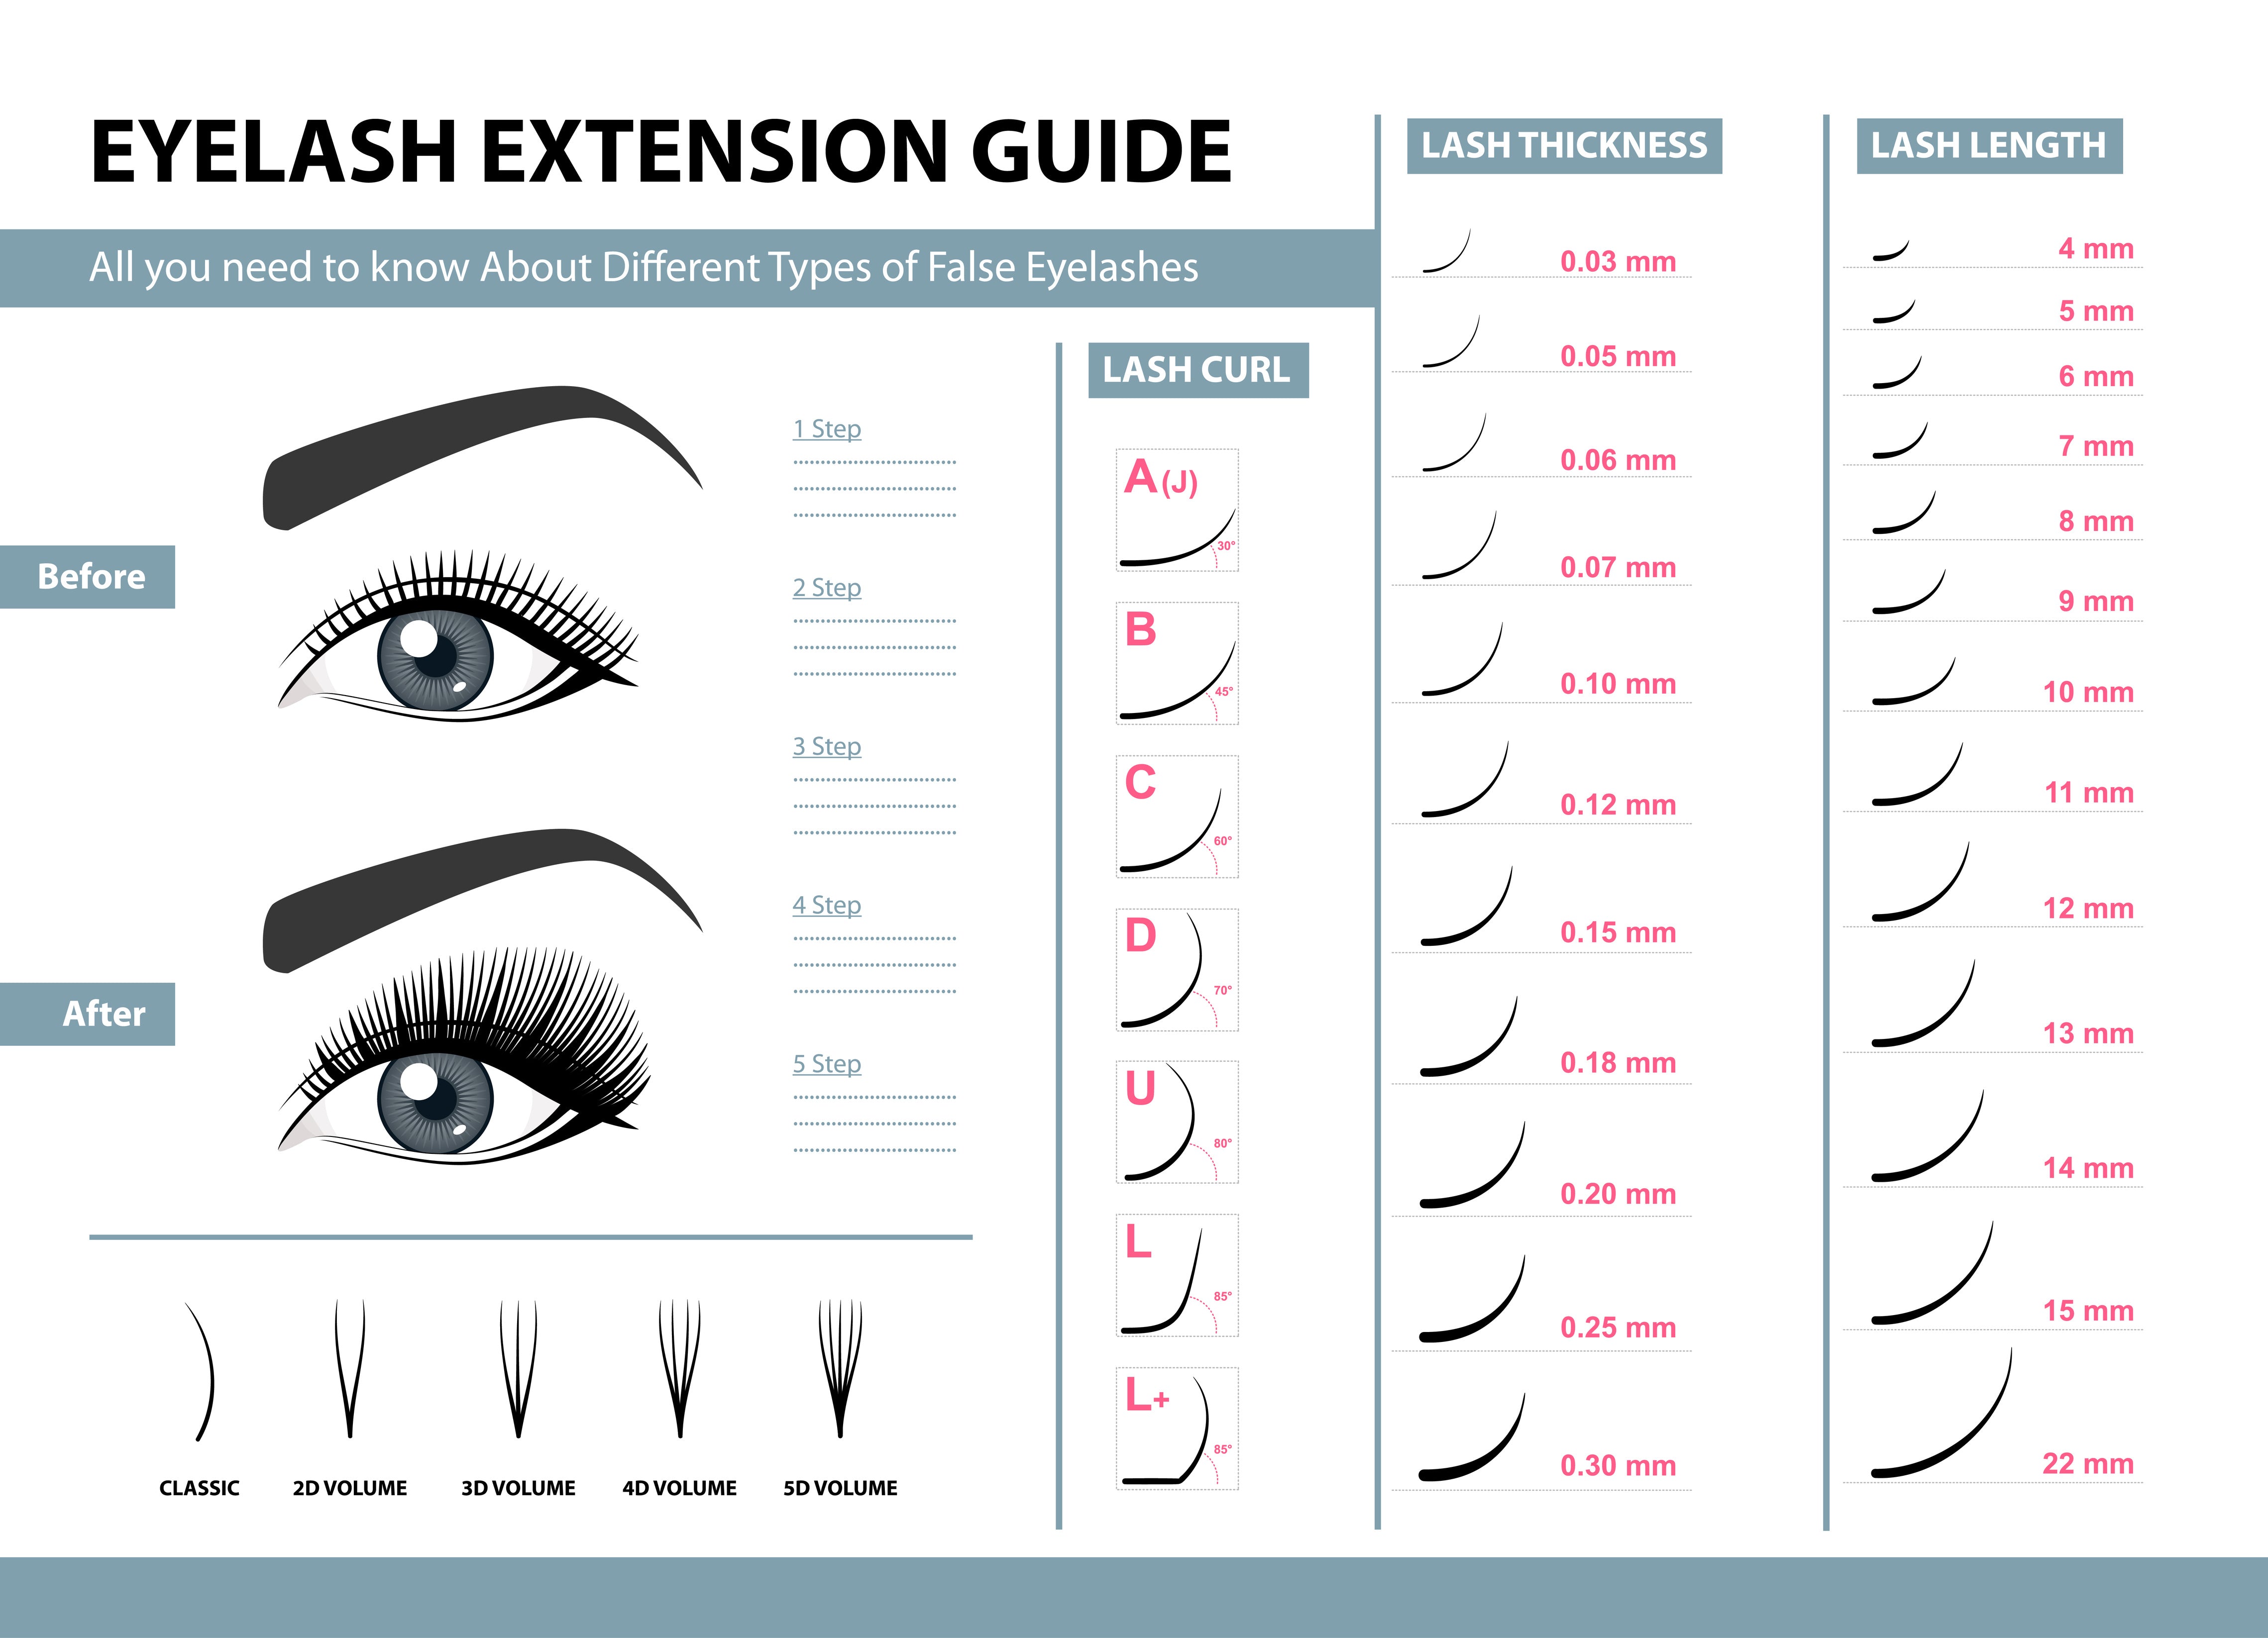 Eyelash Extensions Springfield